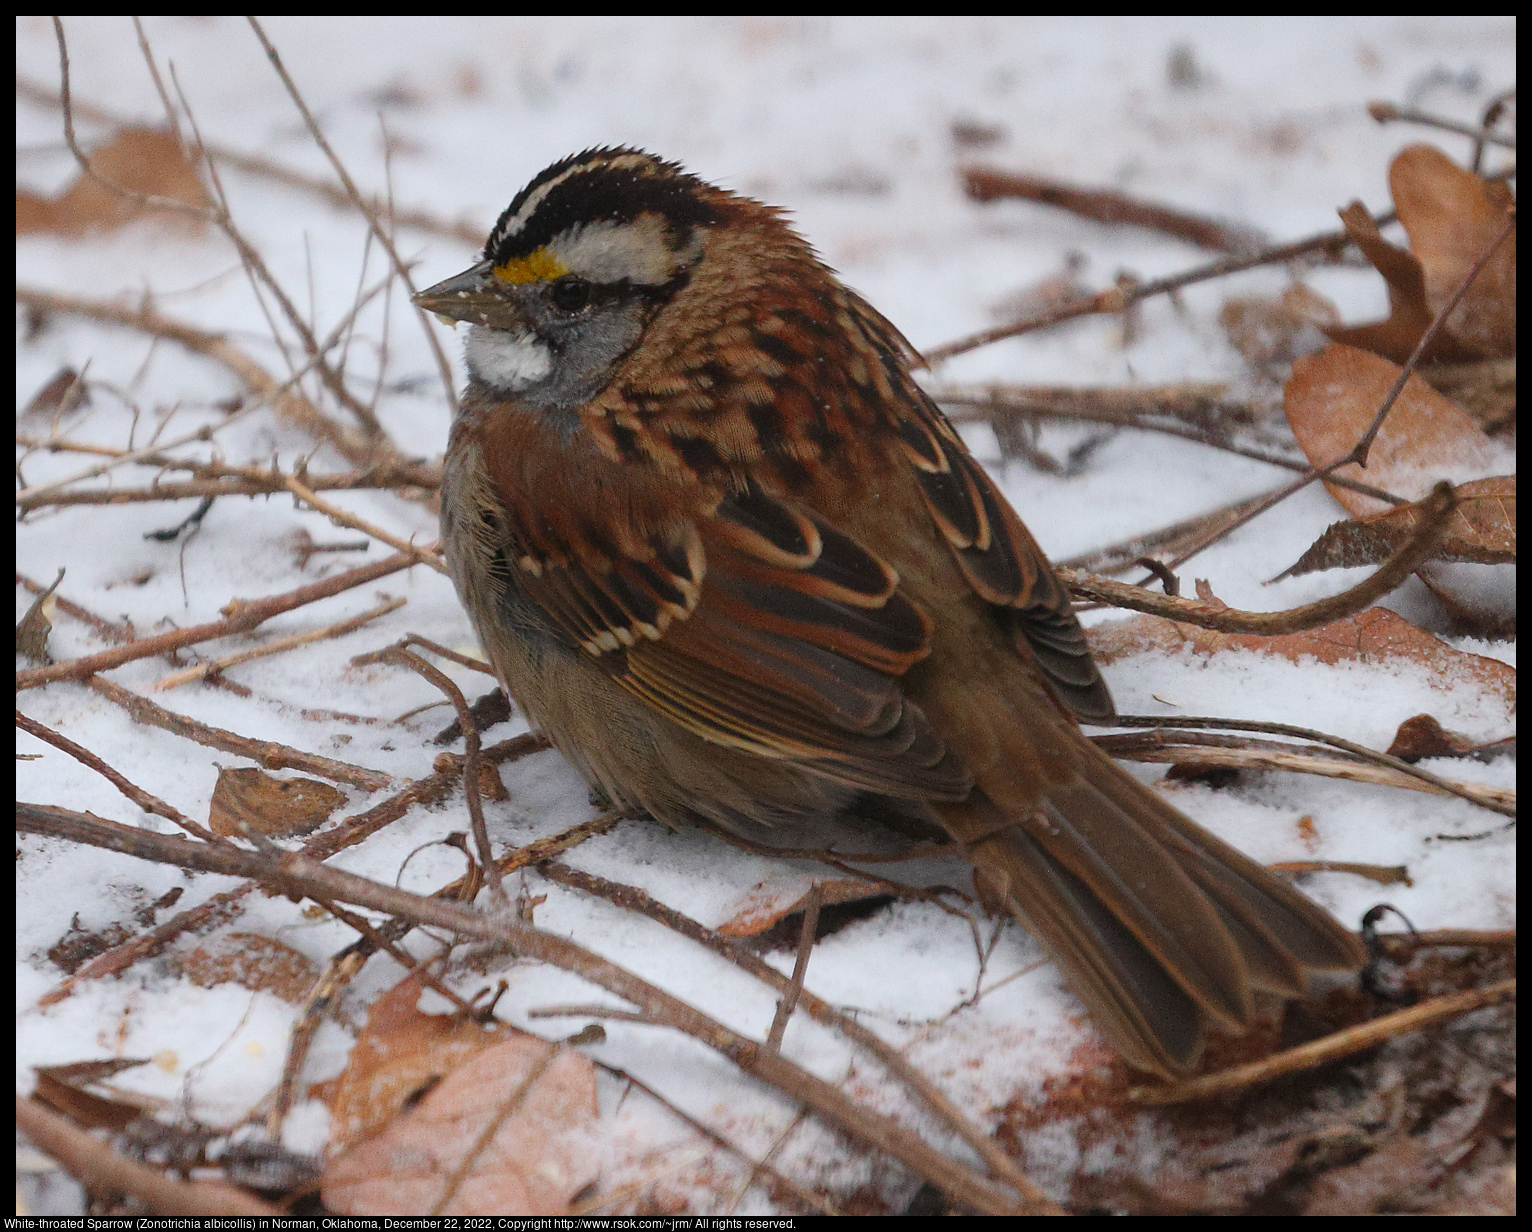 White-throated Sparrow (Zonotrichia albicollis) in Norman, Oklahoma, December 22, 2022